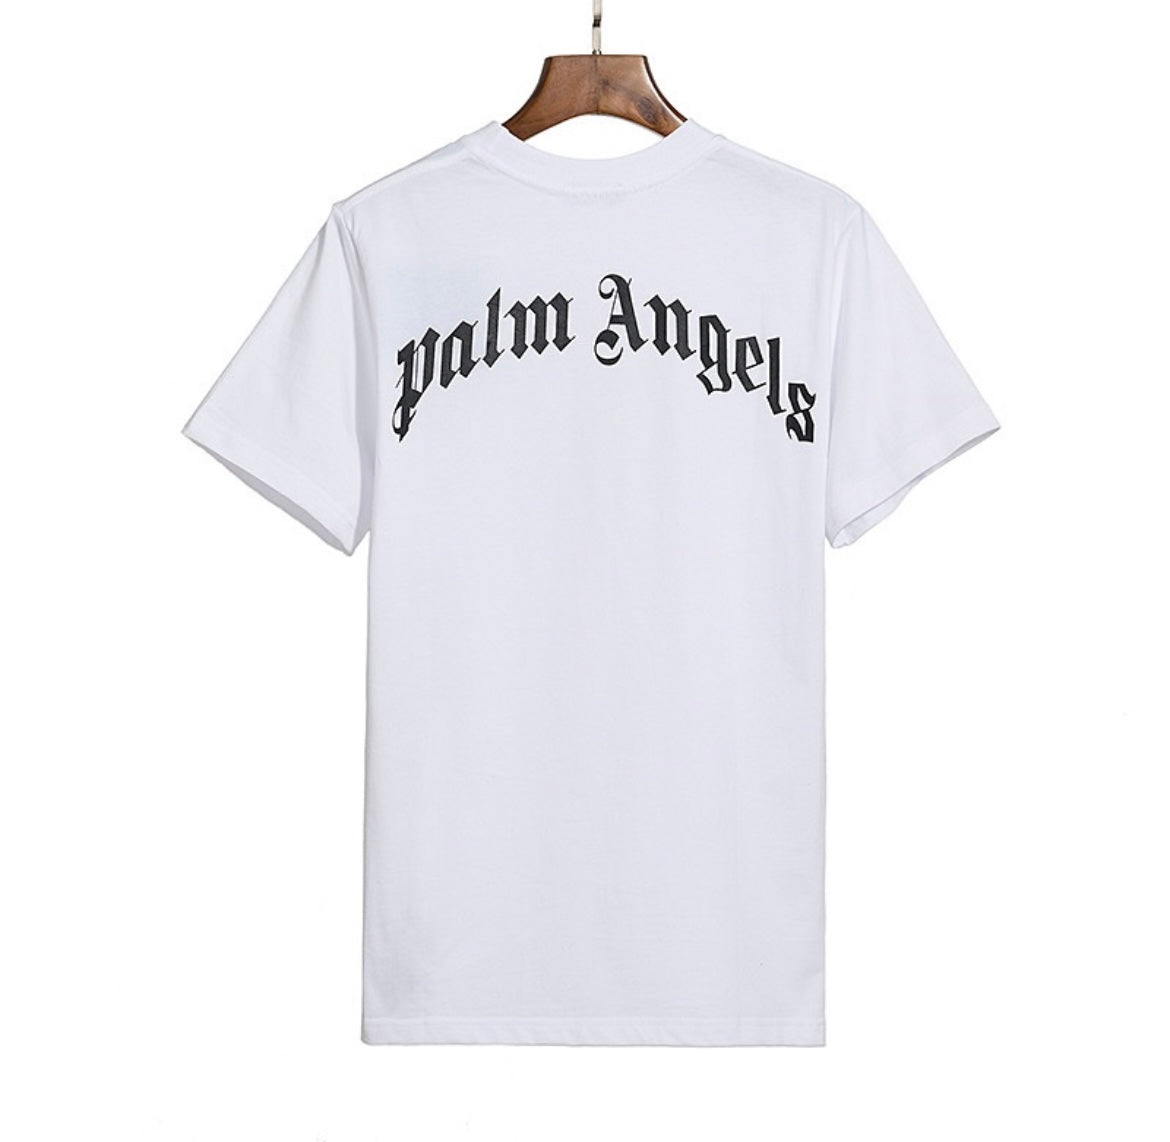 Camiseta Palm Angels Bear